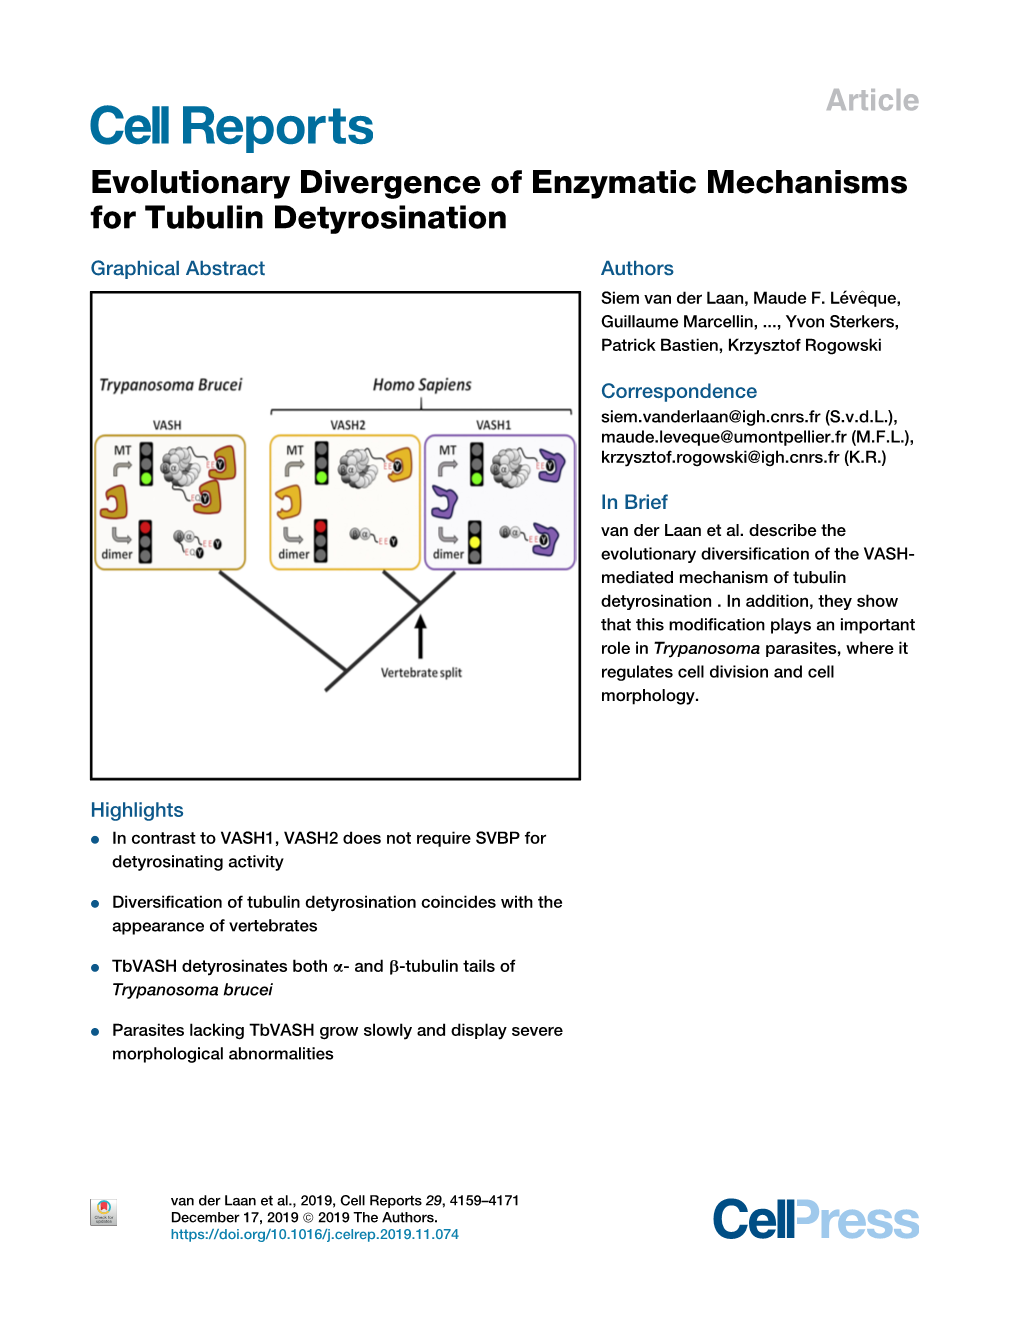 Evolutionary Divergence of Enzymatic Mechanisms for Tubulin Detyrosination